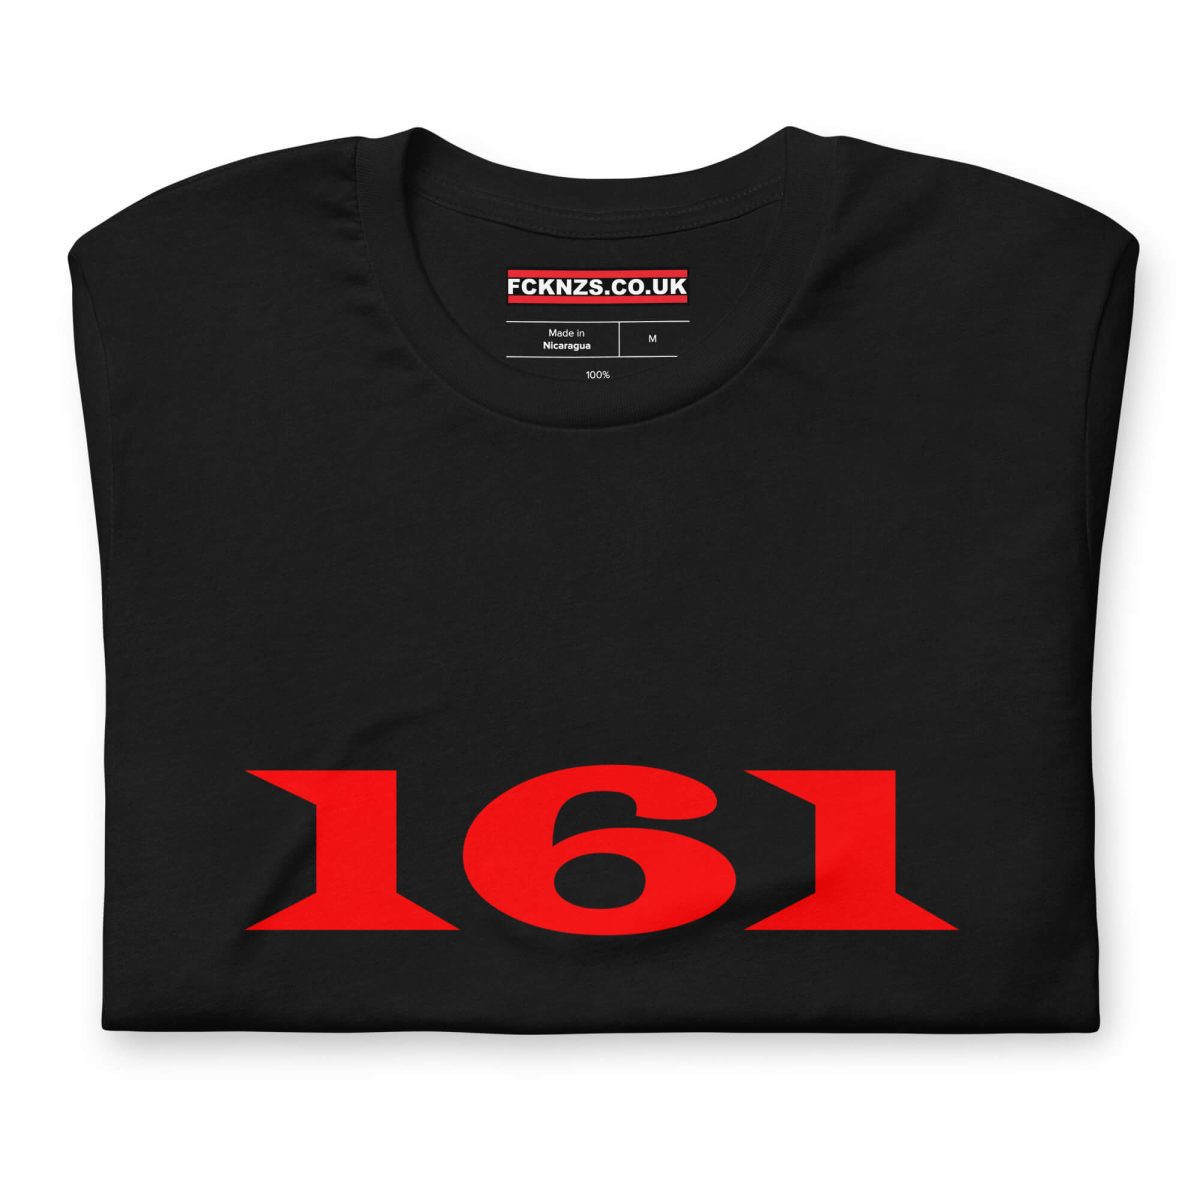 161 AFA Red Unisex T-Shirt